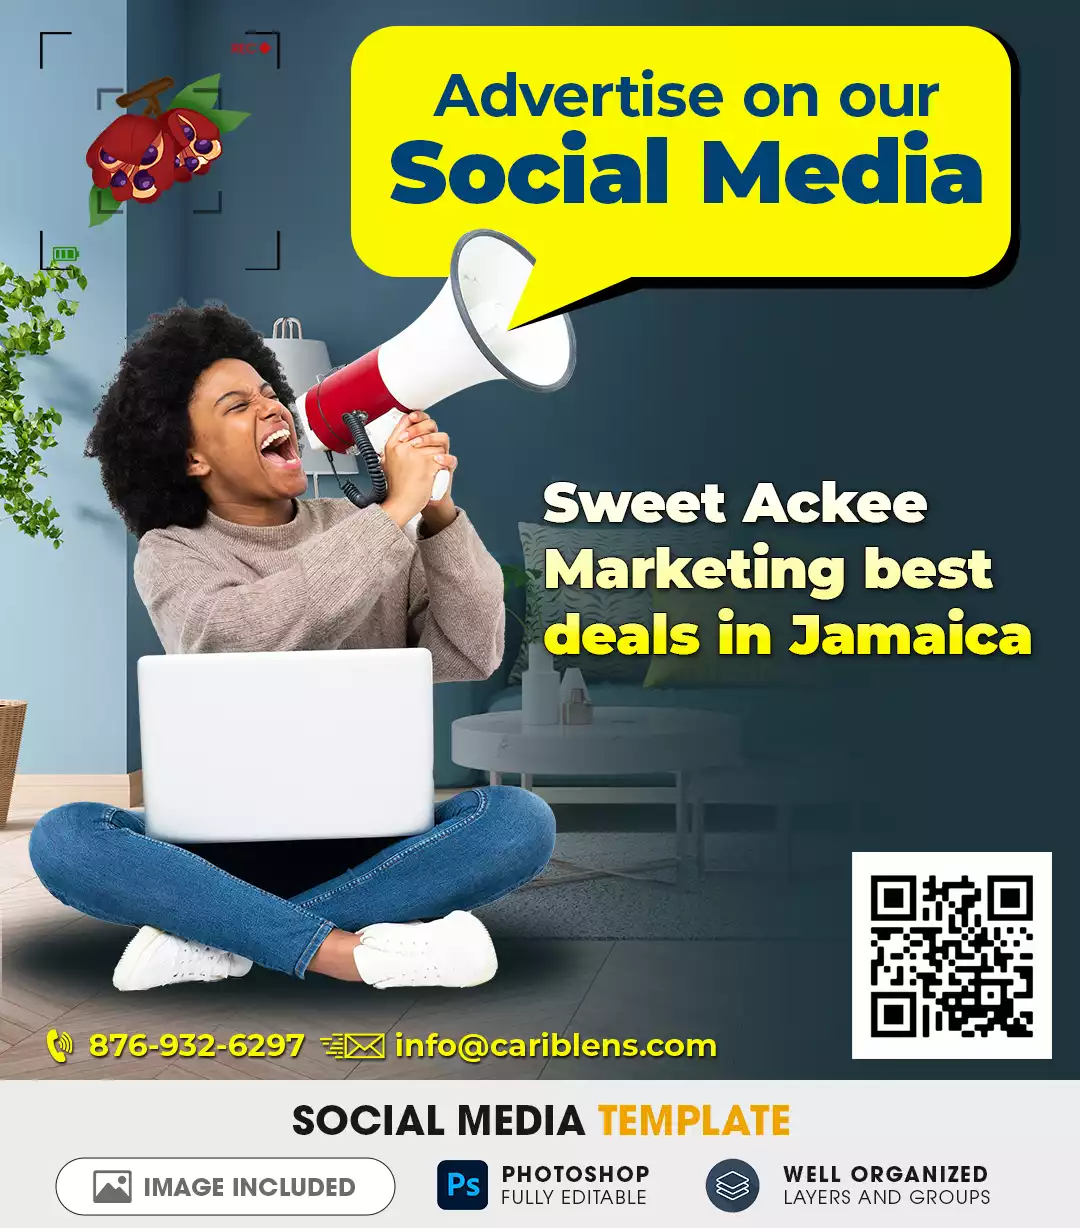 Social Media Digital Marketing And Advertising Flyer Free Download Copy